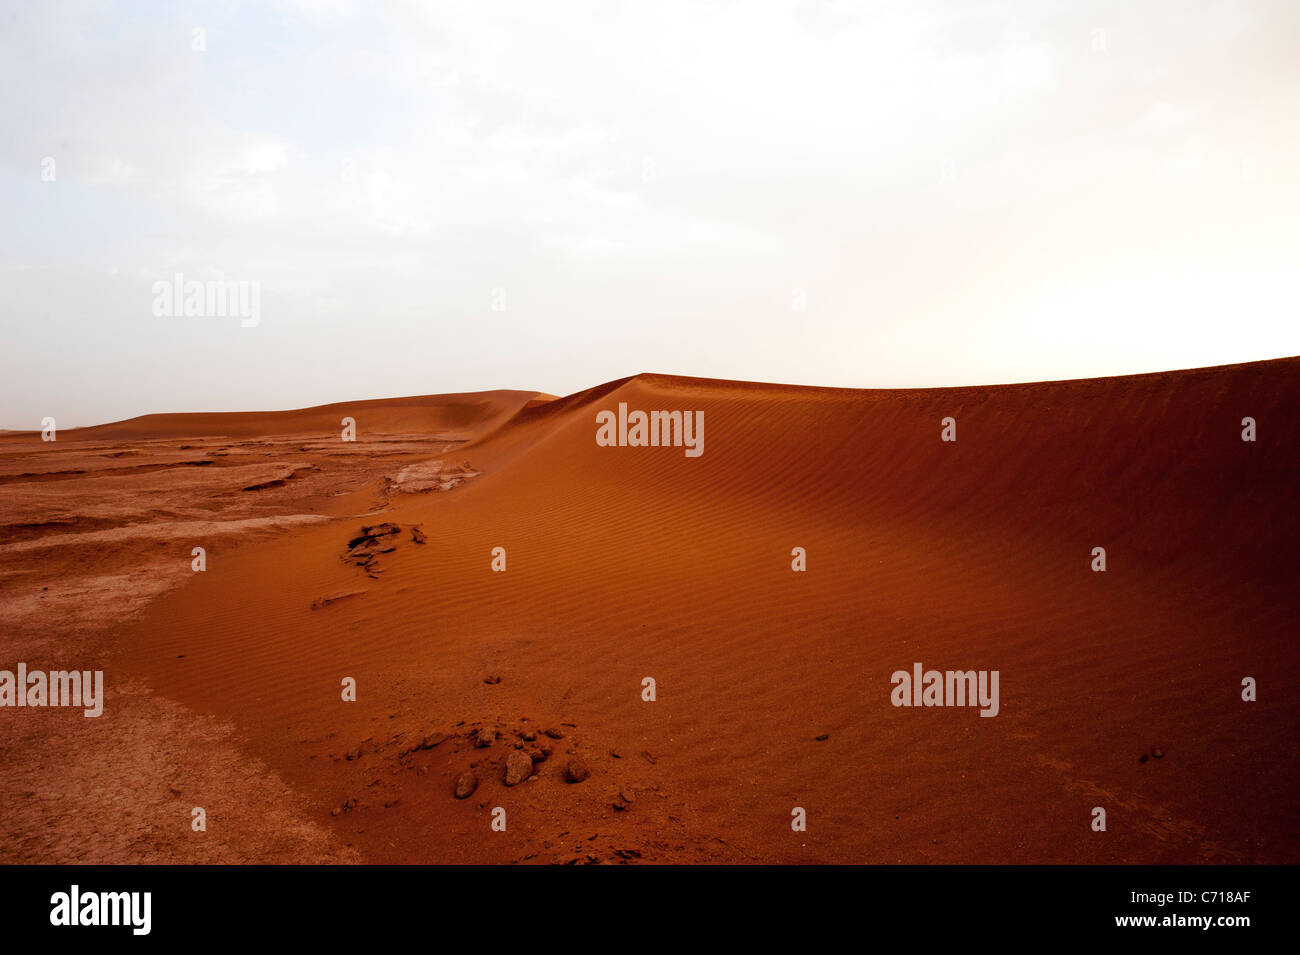 The Saharan sand dunes of Erg Chigaga in southern Morocco. Stock Photo